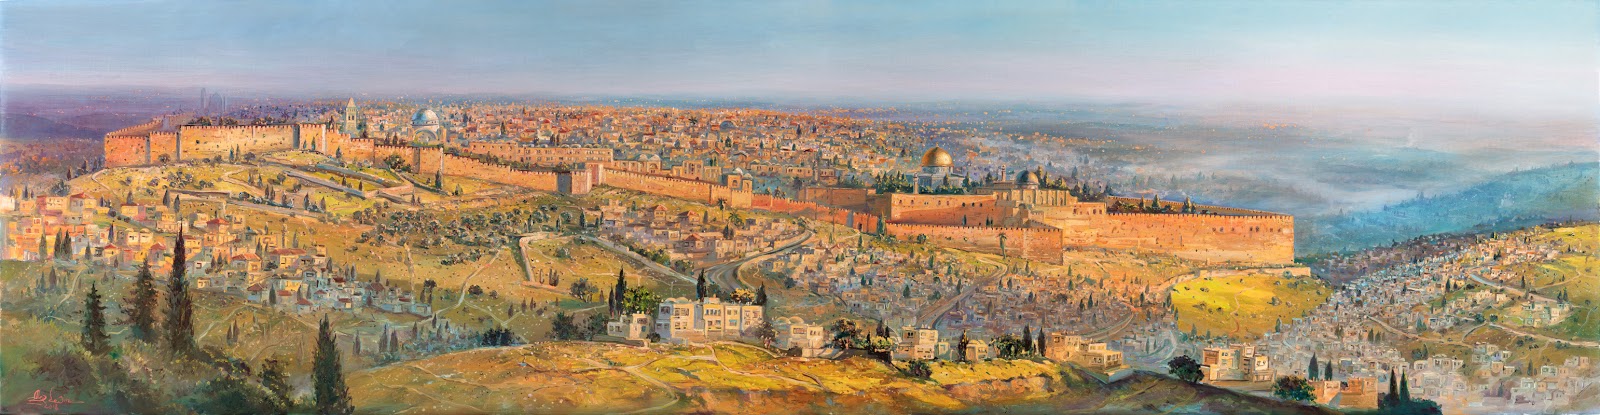 Alex Levin - Pintura da cidade de Jerusalém